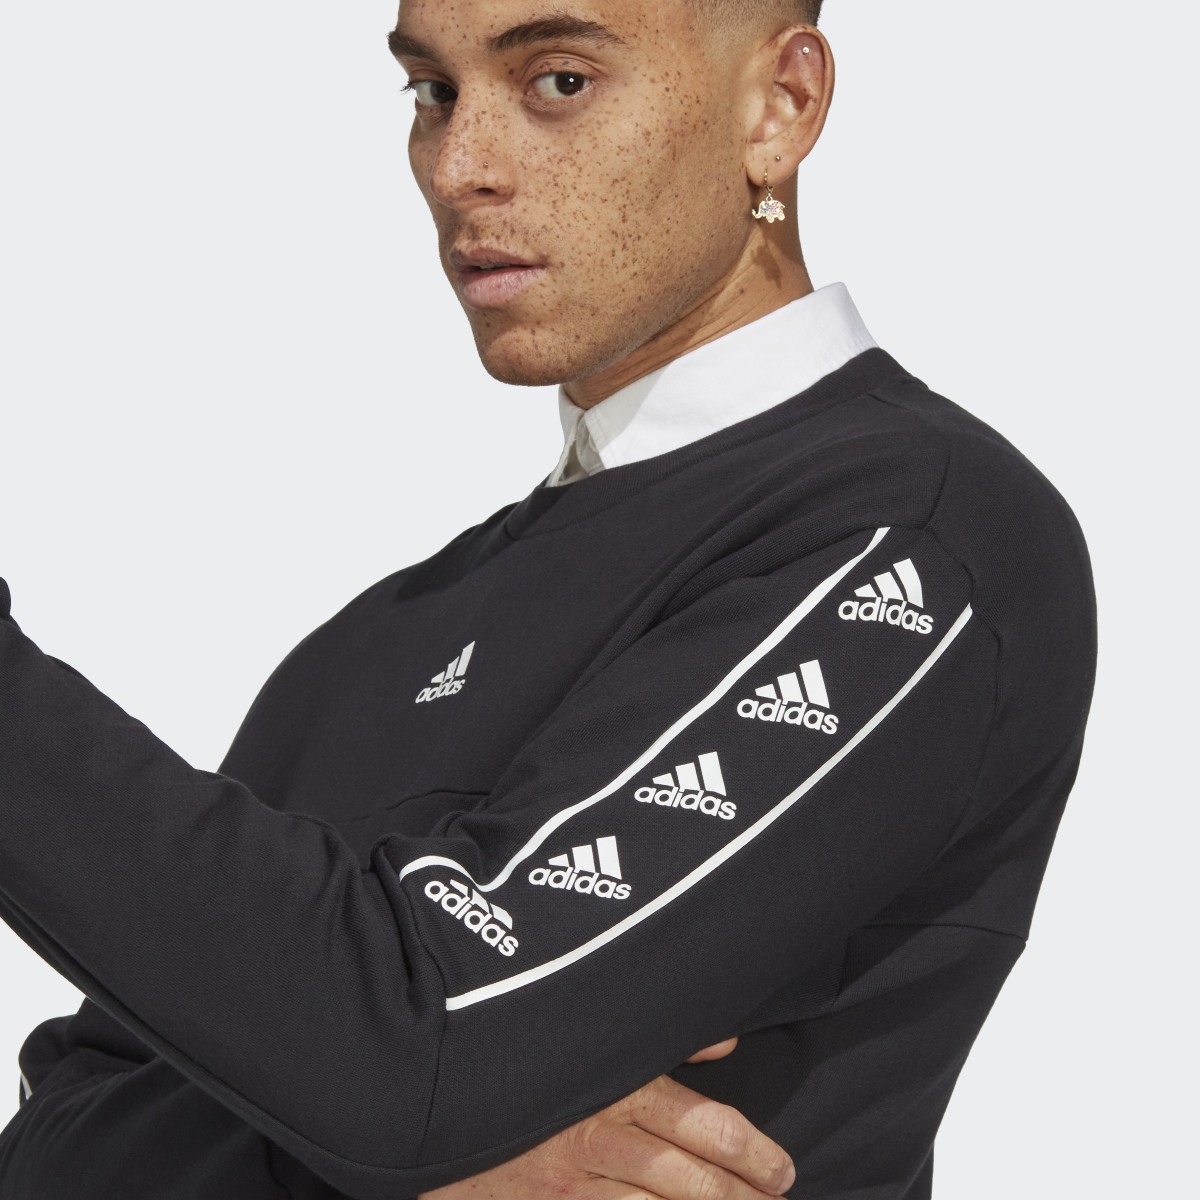 Adidas Brand Love Sweatshirt. 7